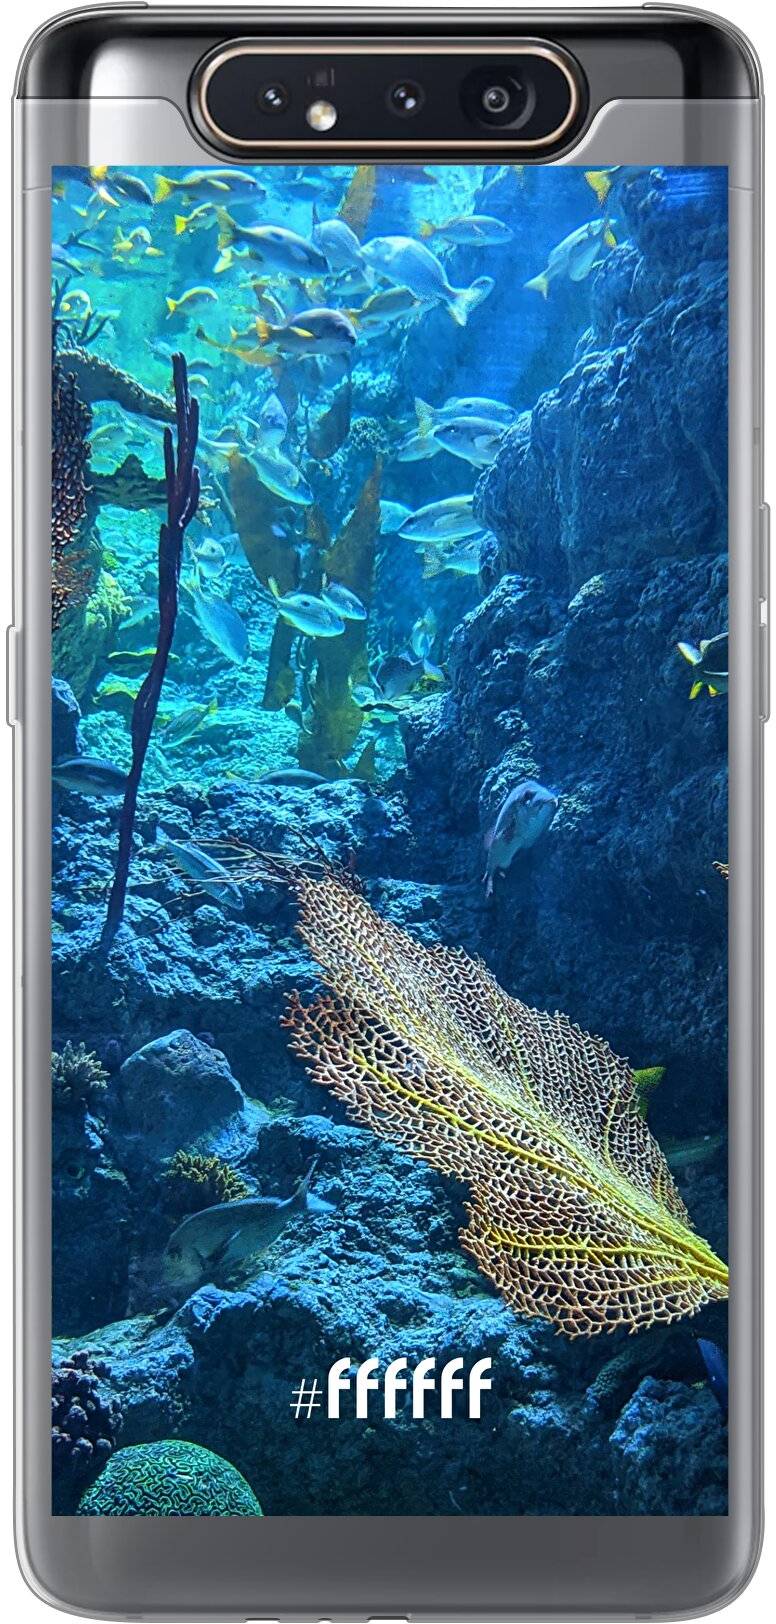 Coral Reef Galaxy A80